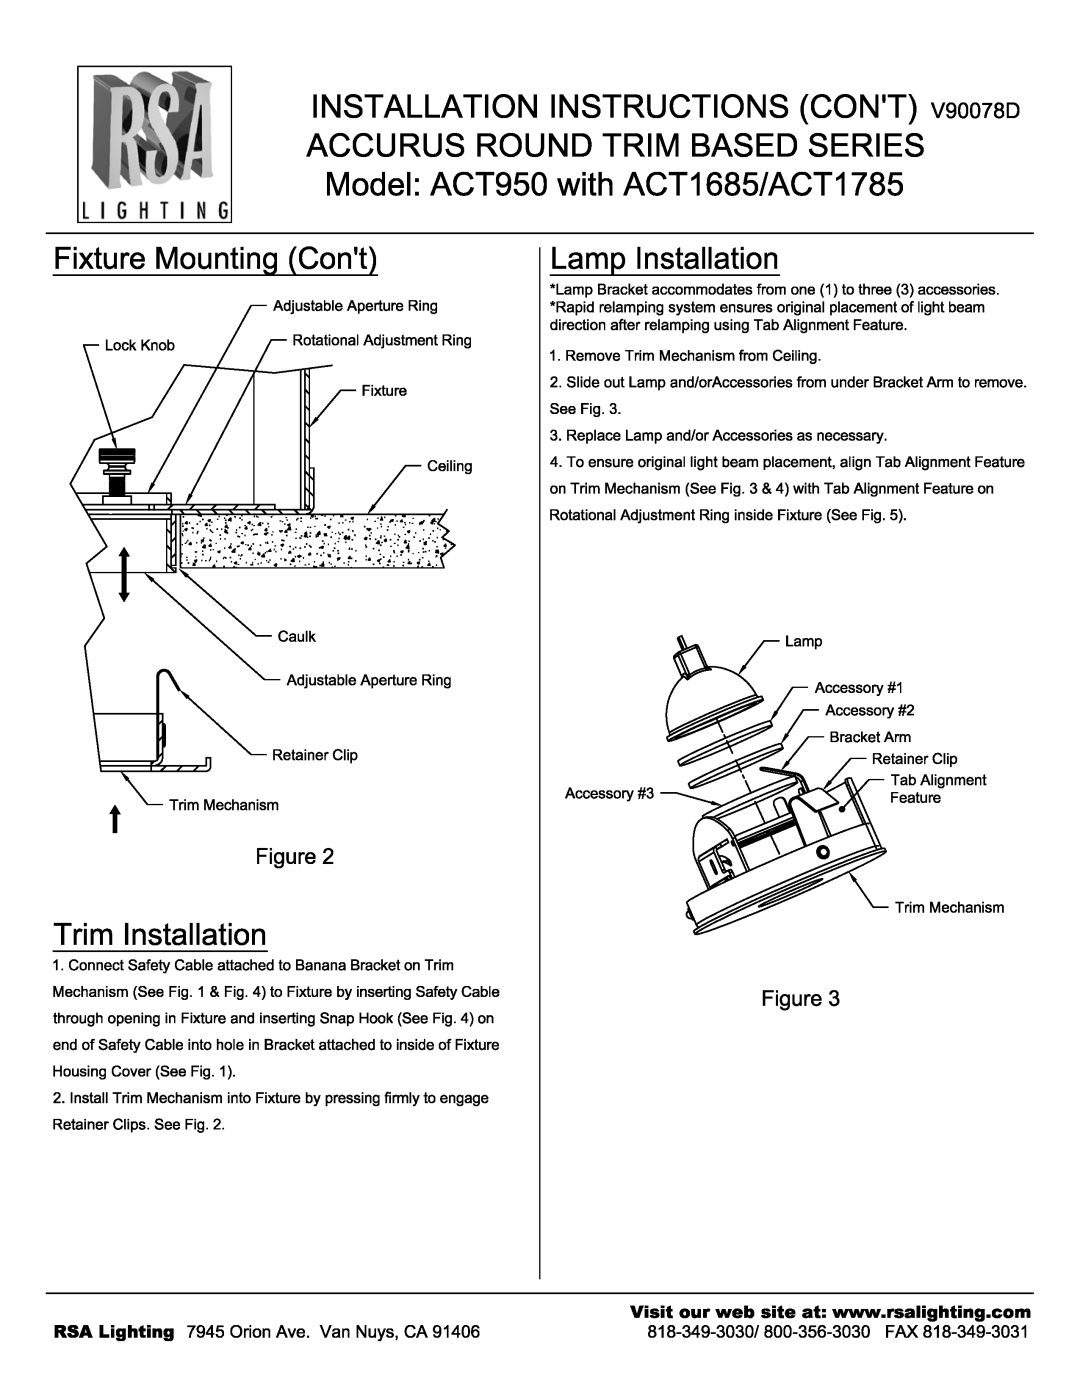 Cooper Lighting ACT1785 manual 